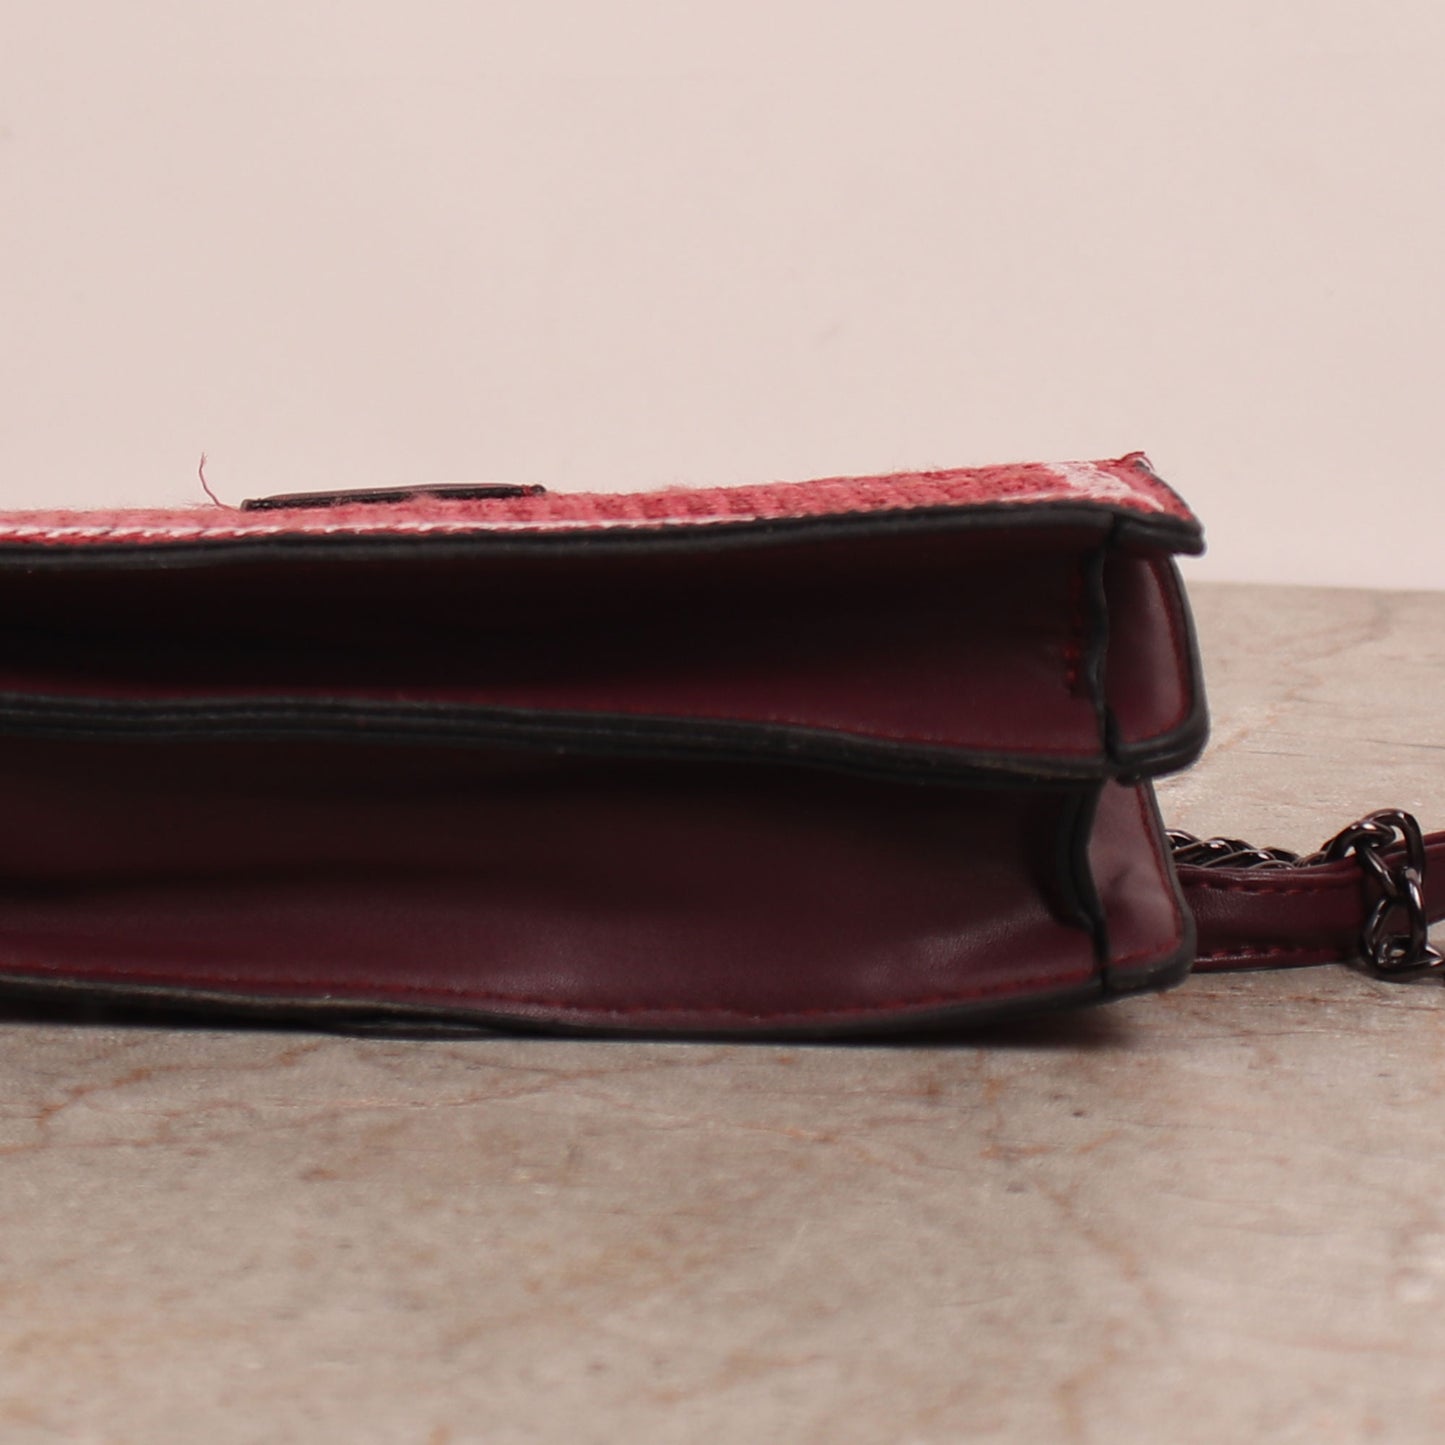 Sling Bag,The Maroon Ravishing Sling bag - Cippele Multi Store